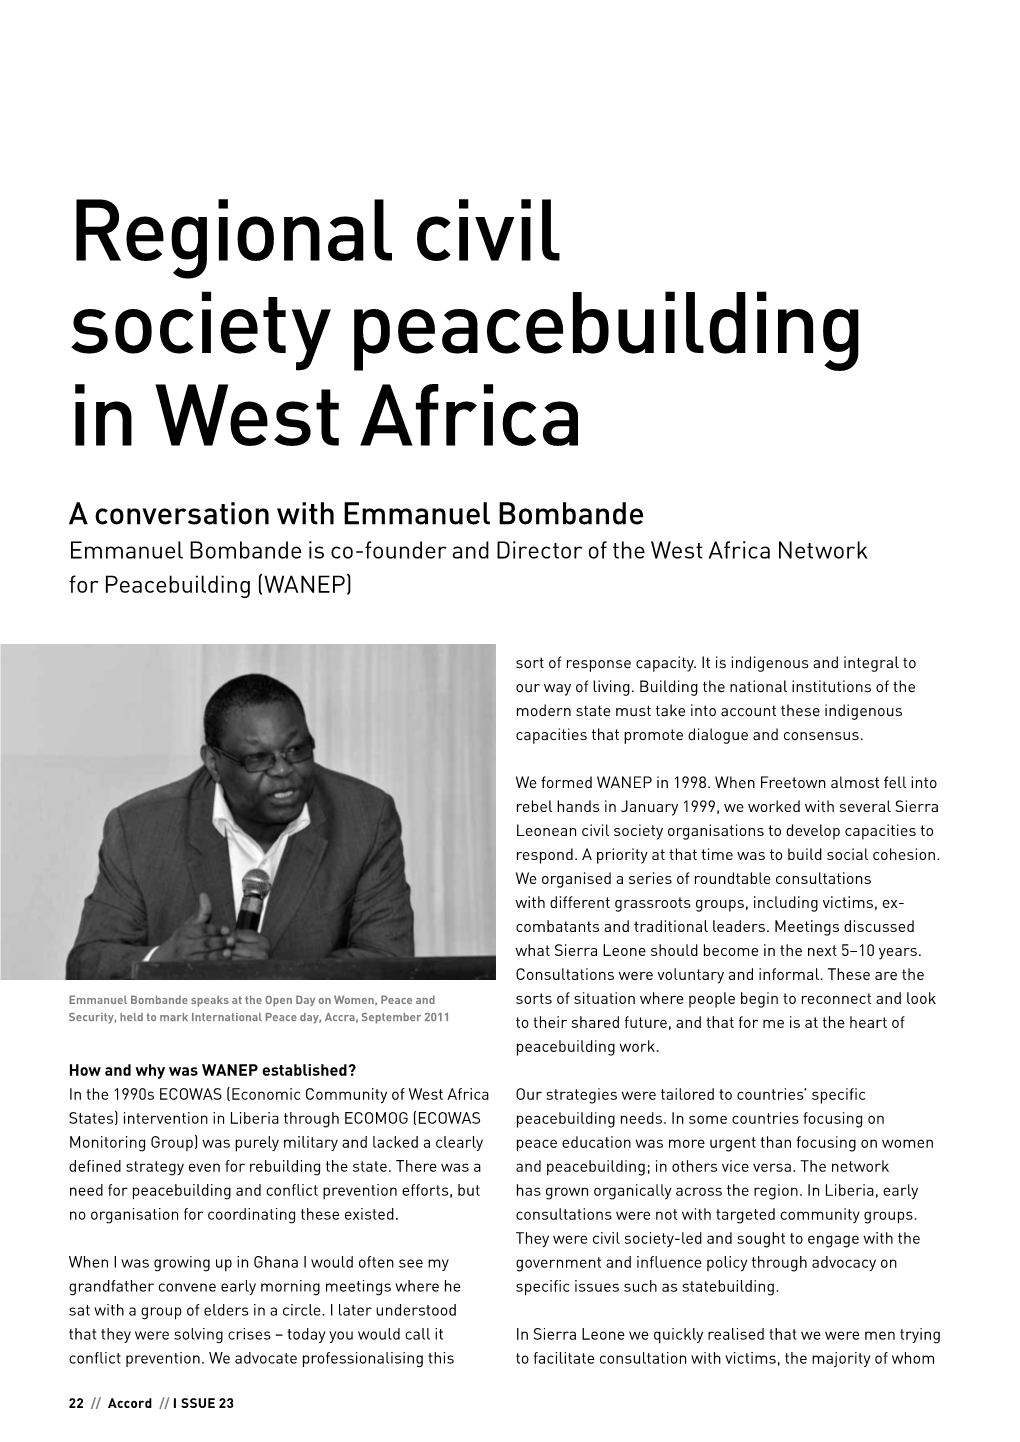 Regional Civil Society Peacebuilding in West Africa